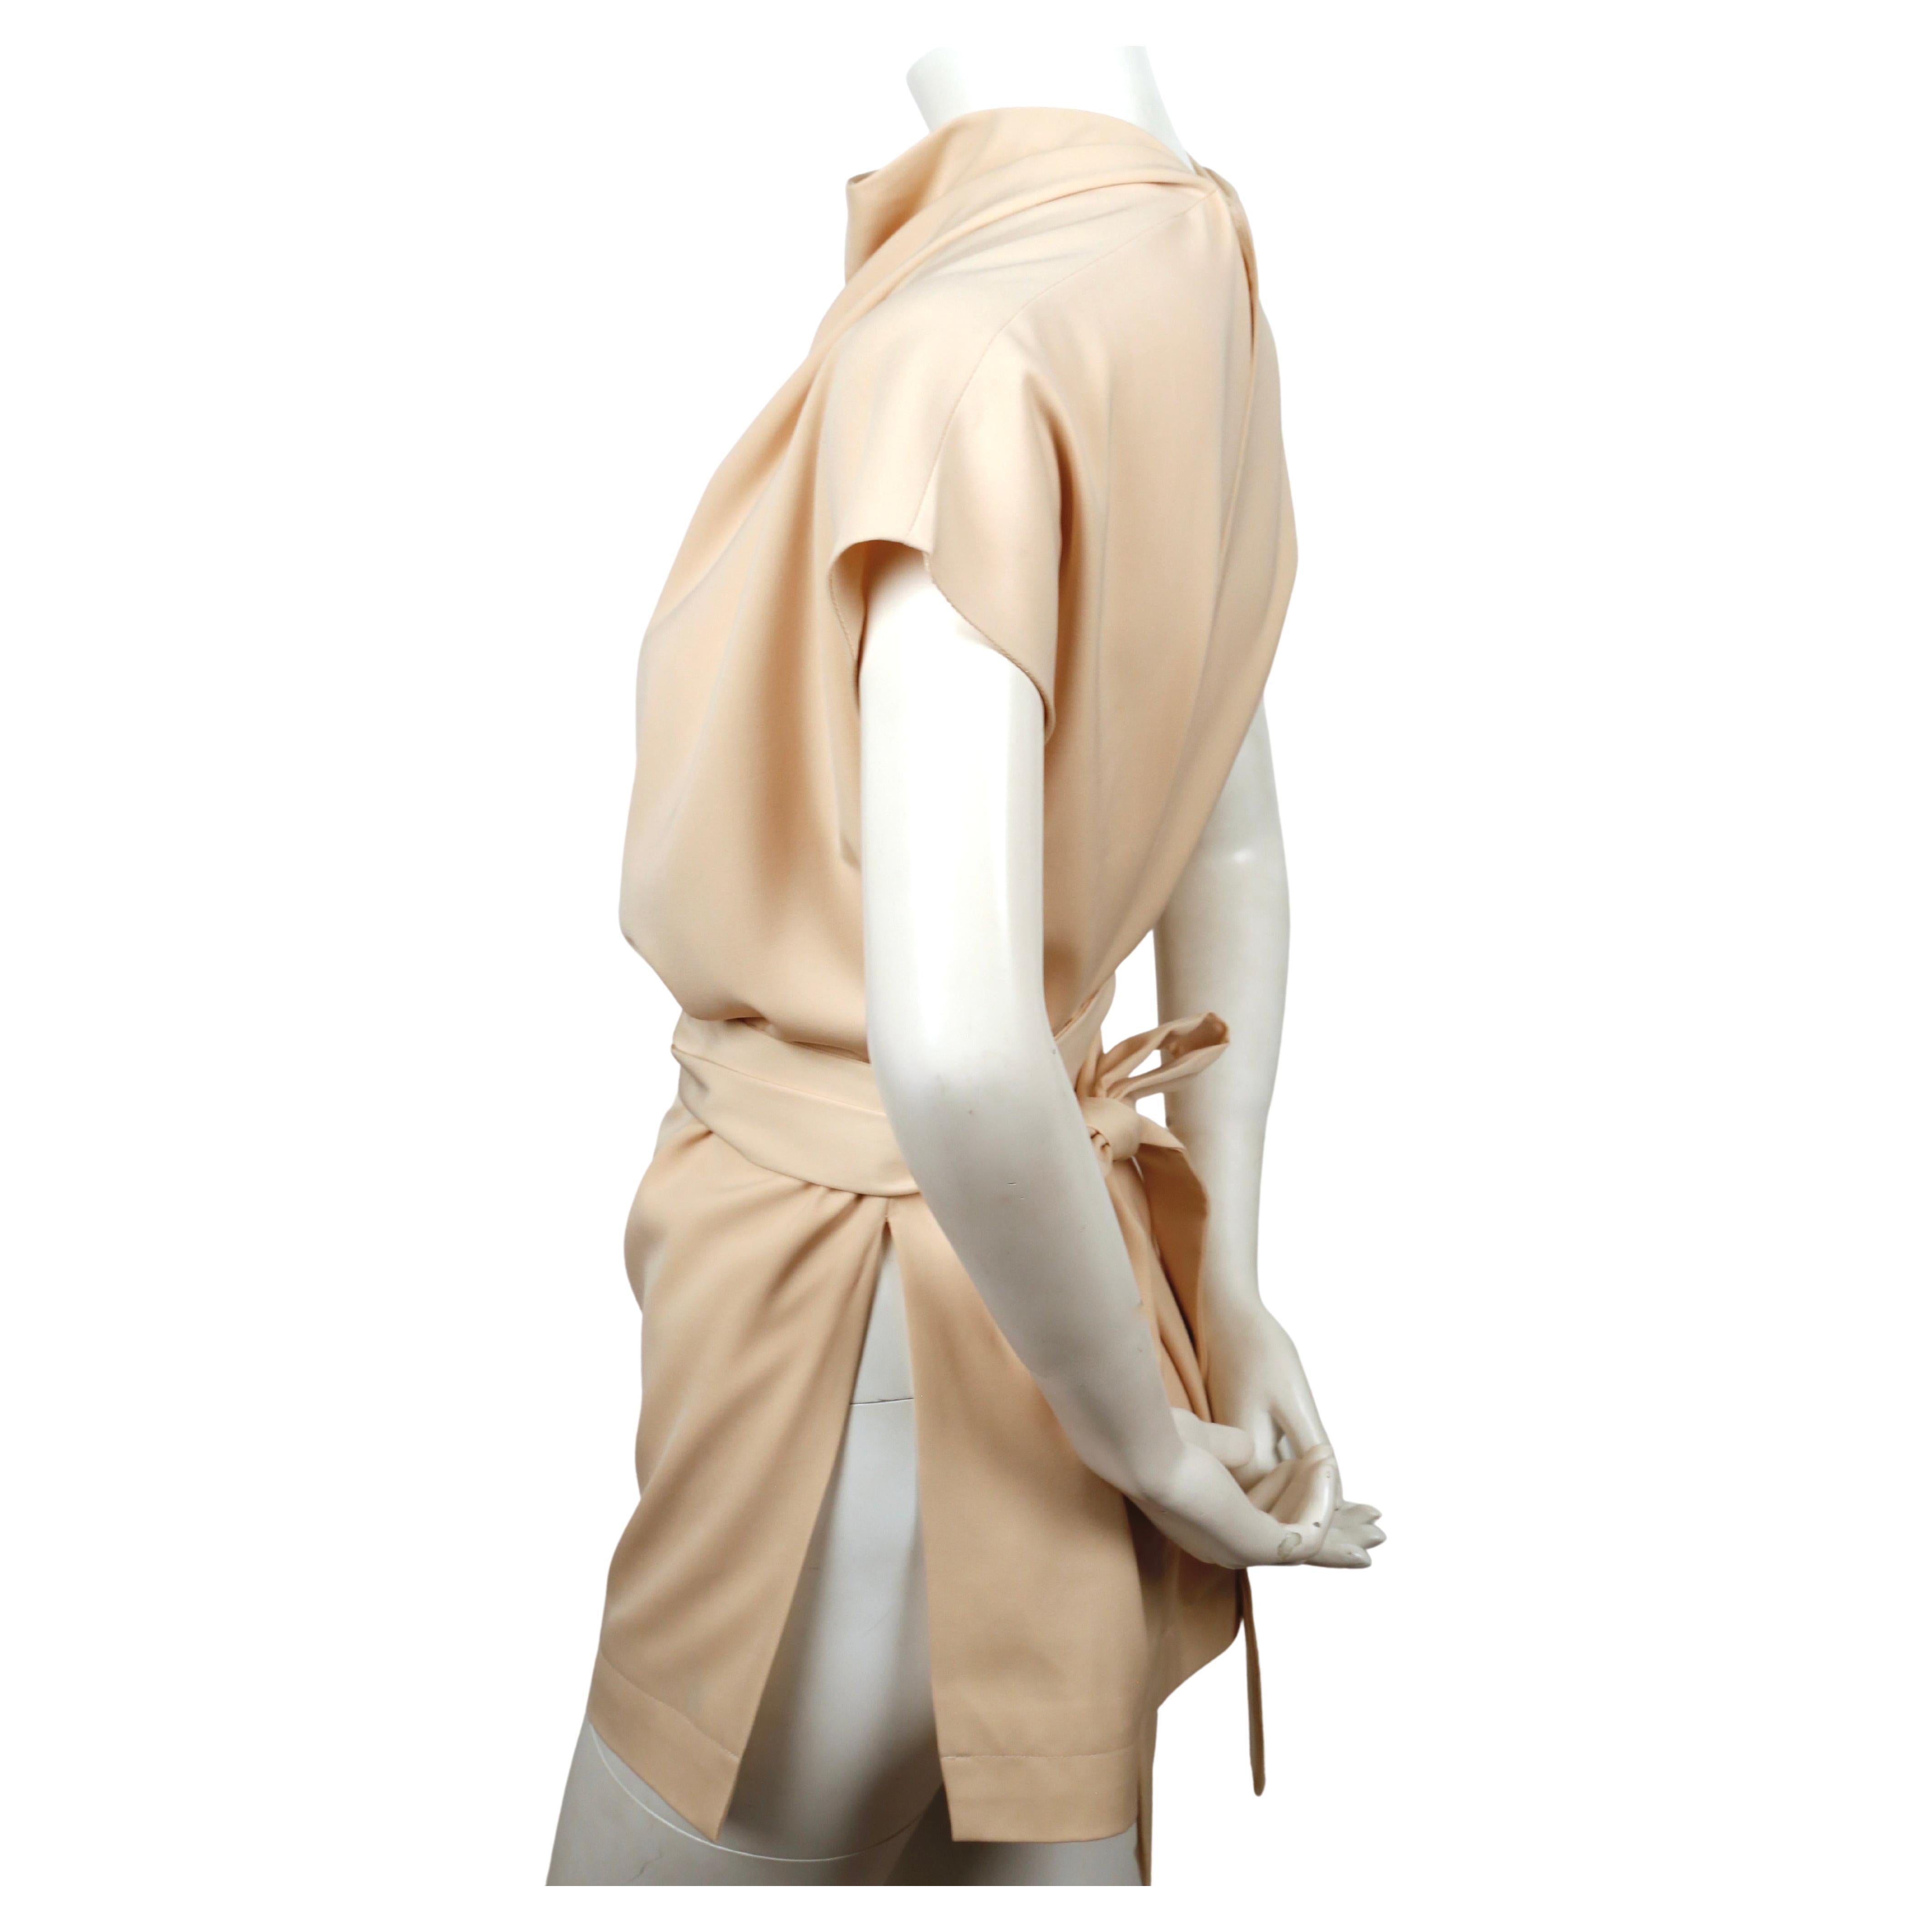 Women's 2015 CELINE by PHOEBE PHILO draped cream tunic top with long ties